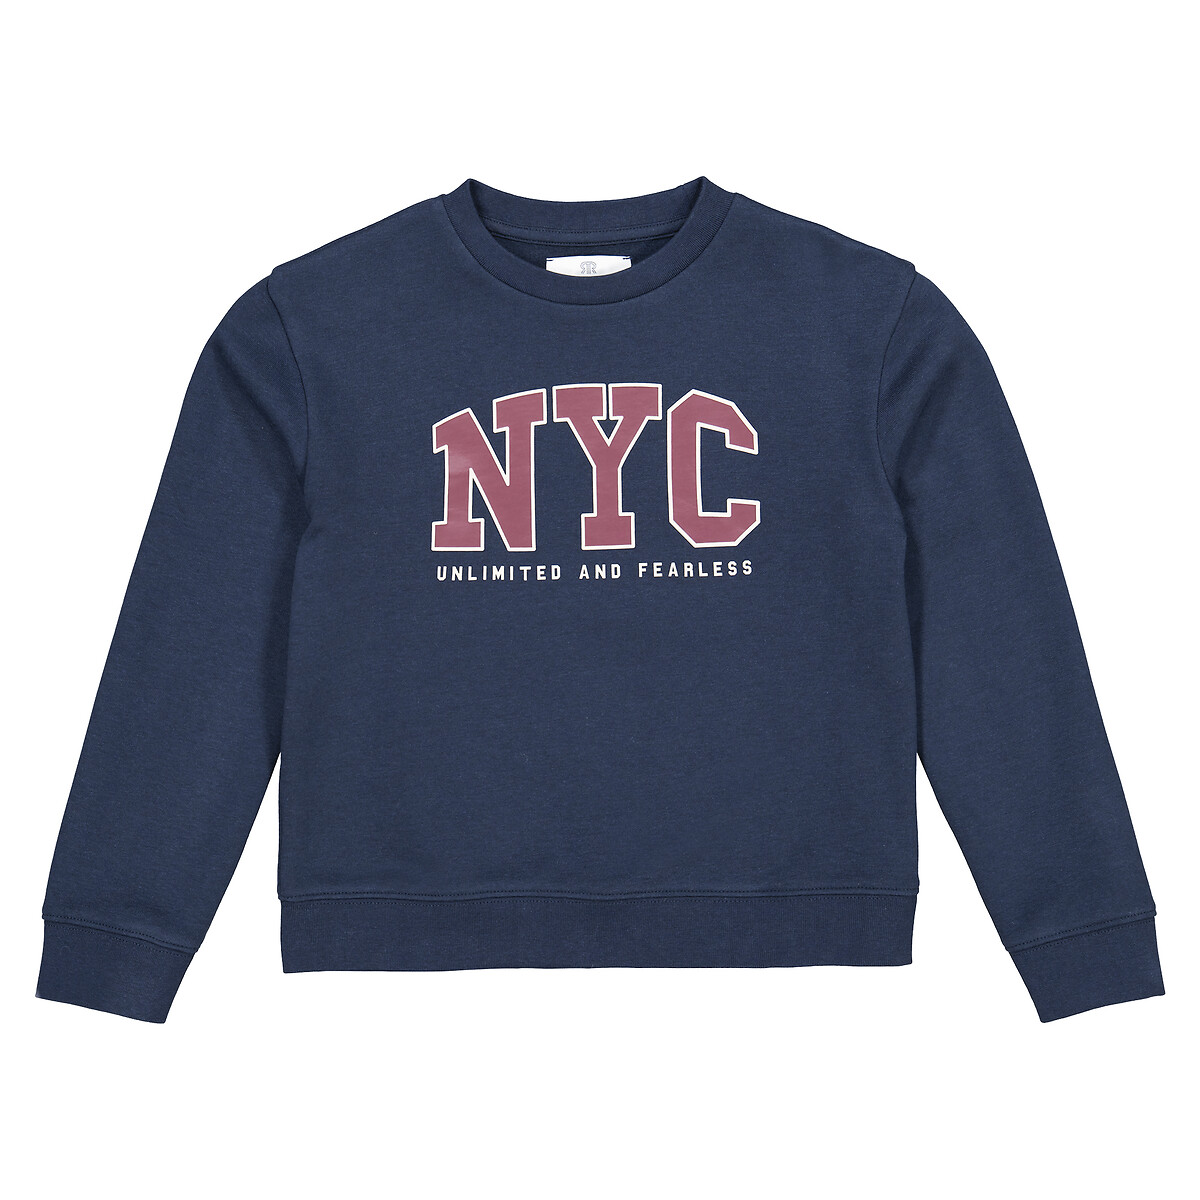 Slogan print sweatshirt in cotton mix with crew neck, navy blue, La ...